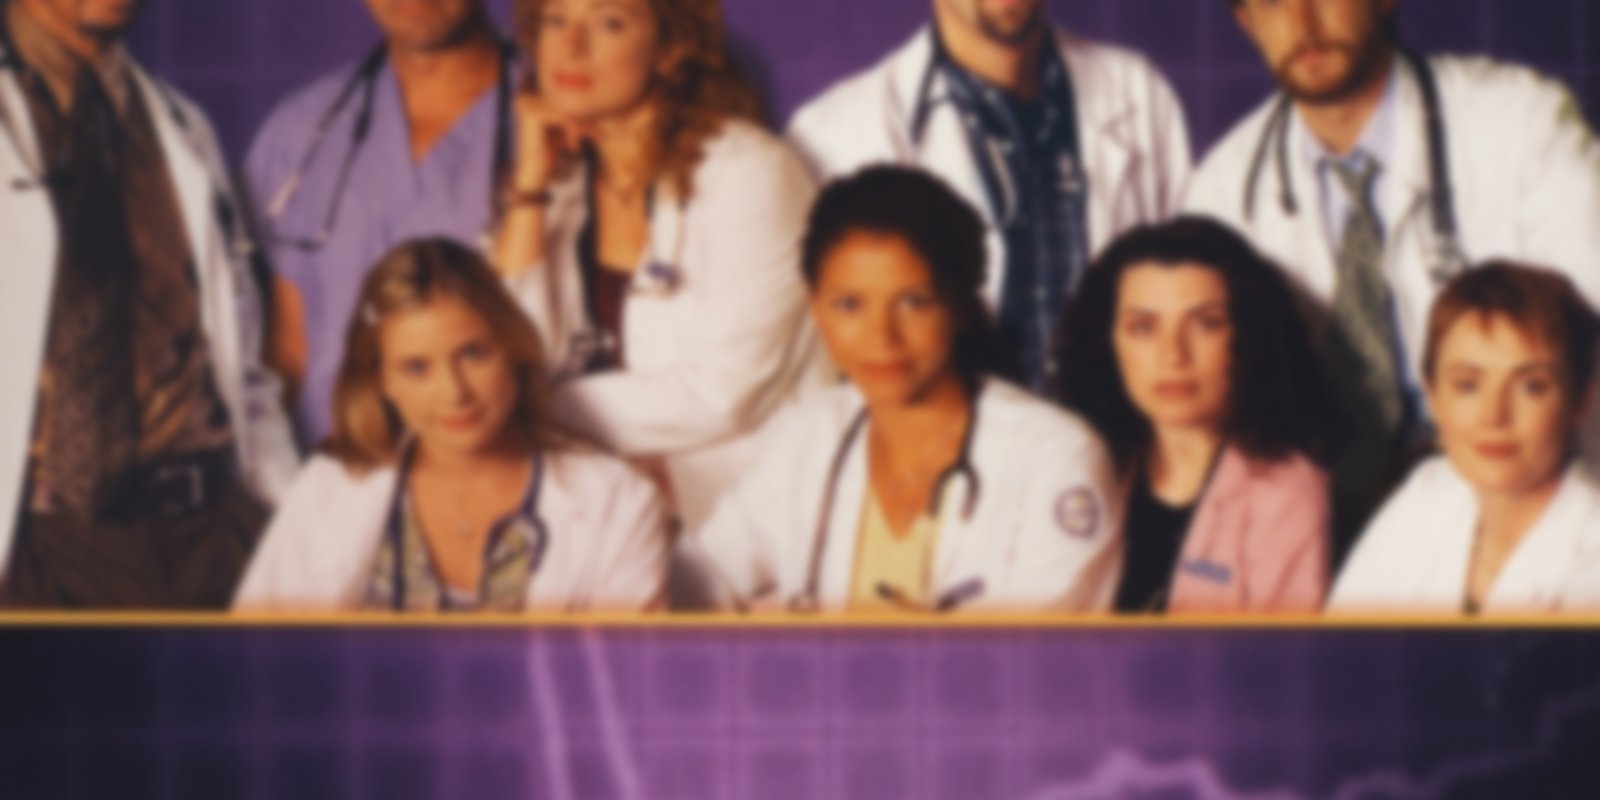 ER - Emergency Room - Staffel 5